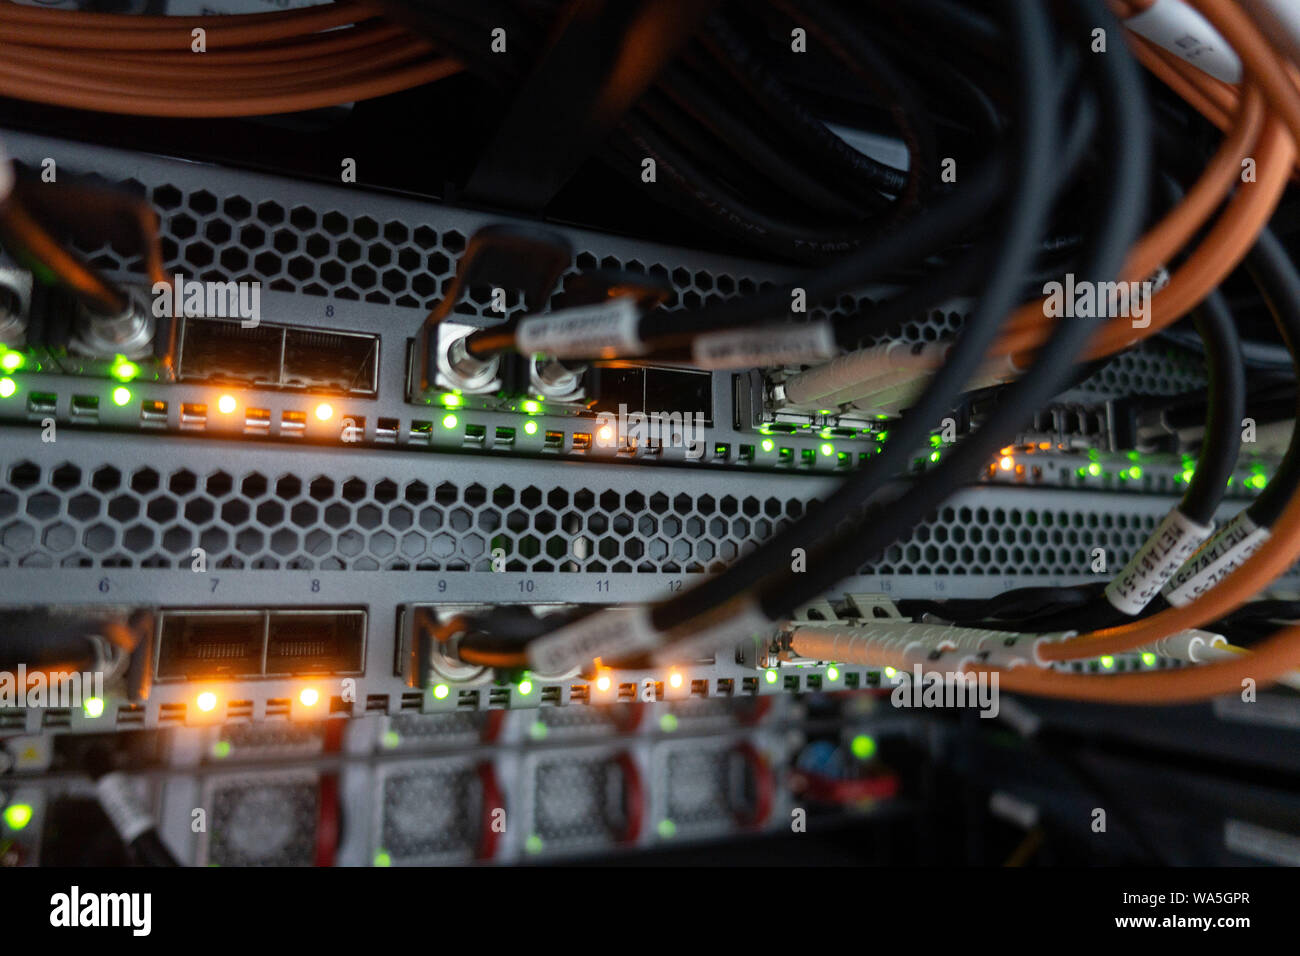 Fibre Optical Switch mit angeschlossenen FC-Kabel im Serverraum. Stockfoto